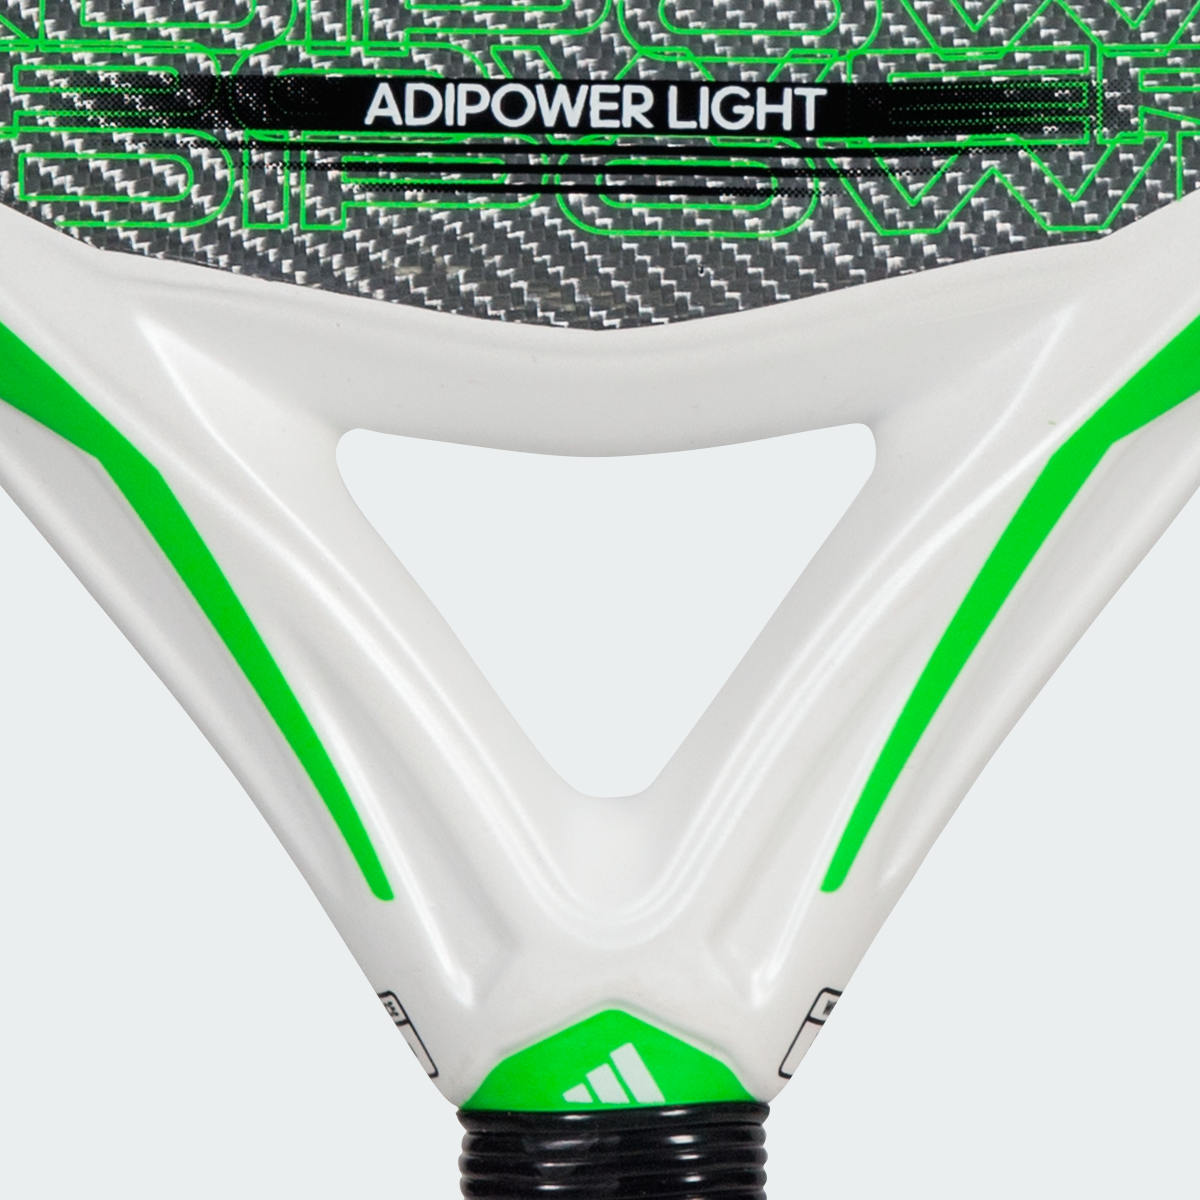 Adidas Adipower Light 3.3 Padel-Schläger. 5